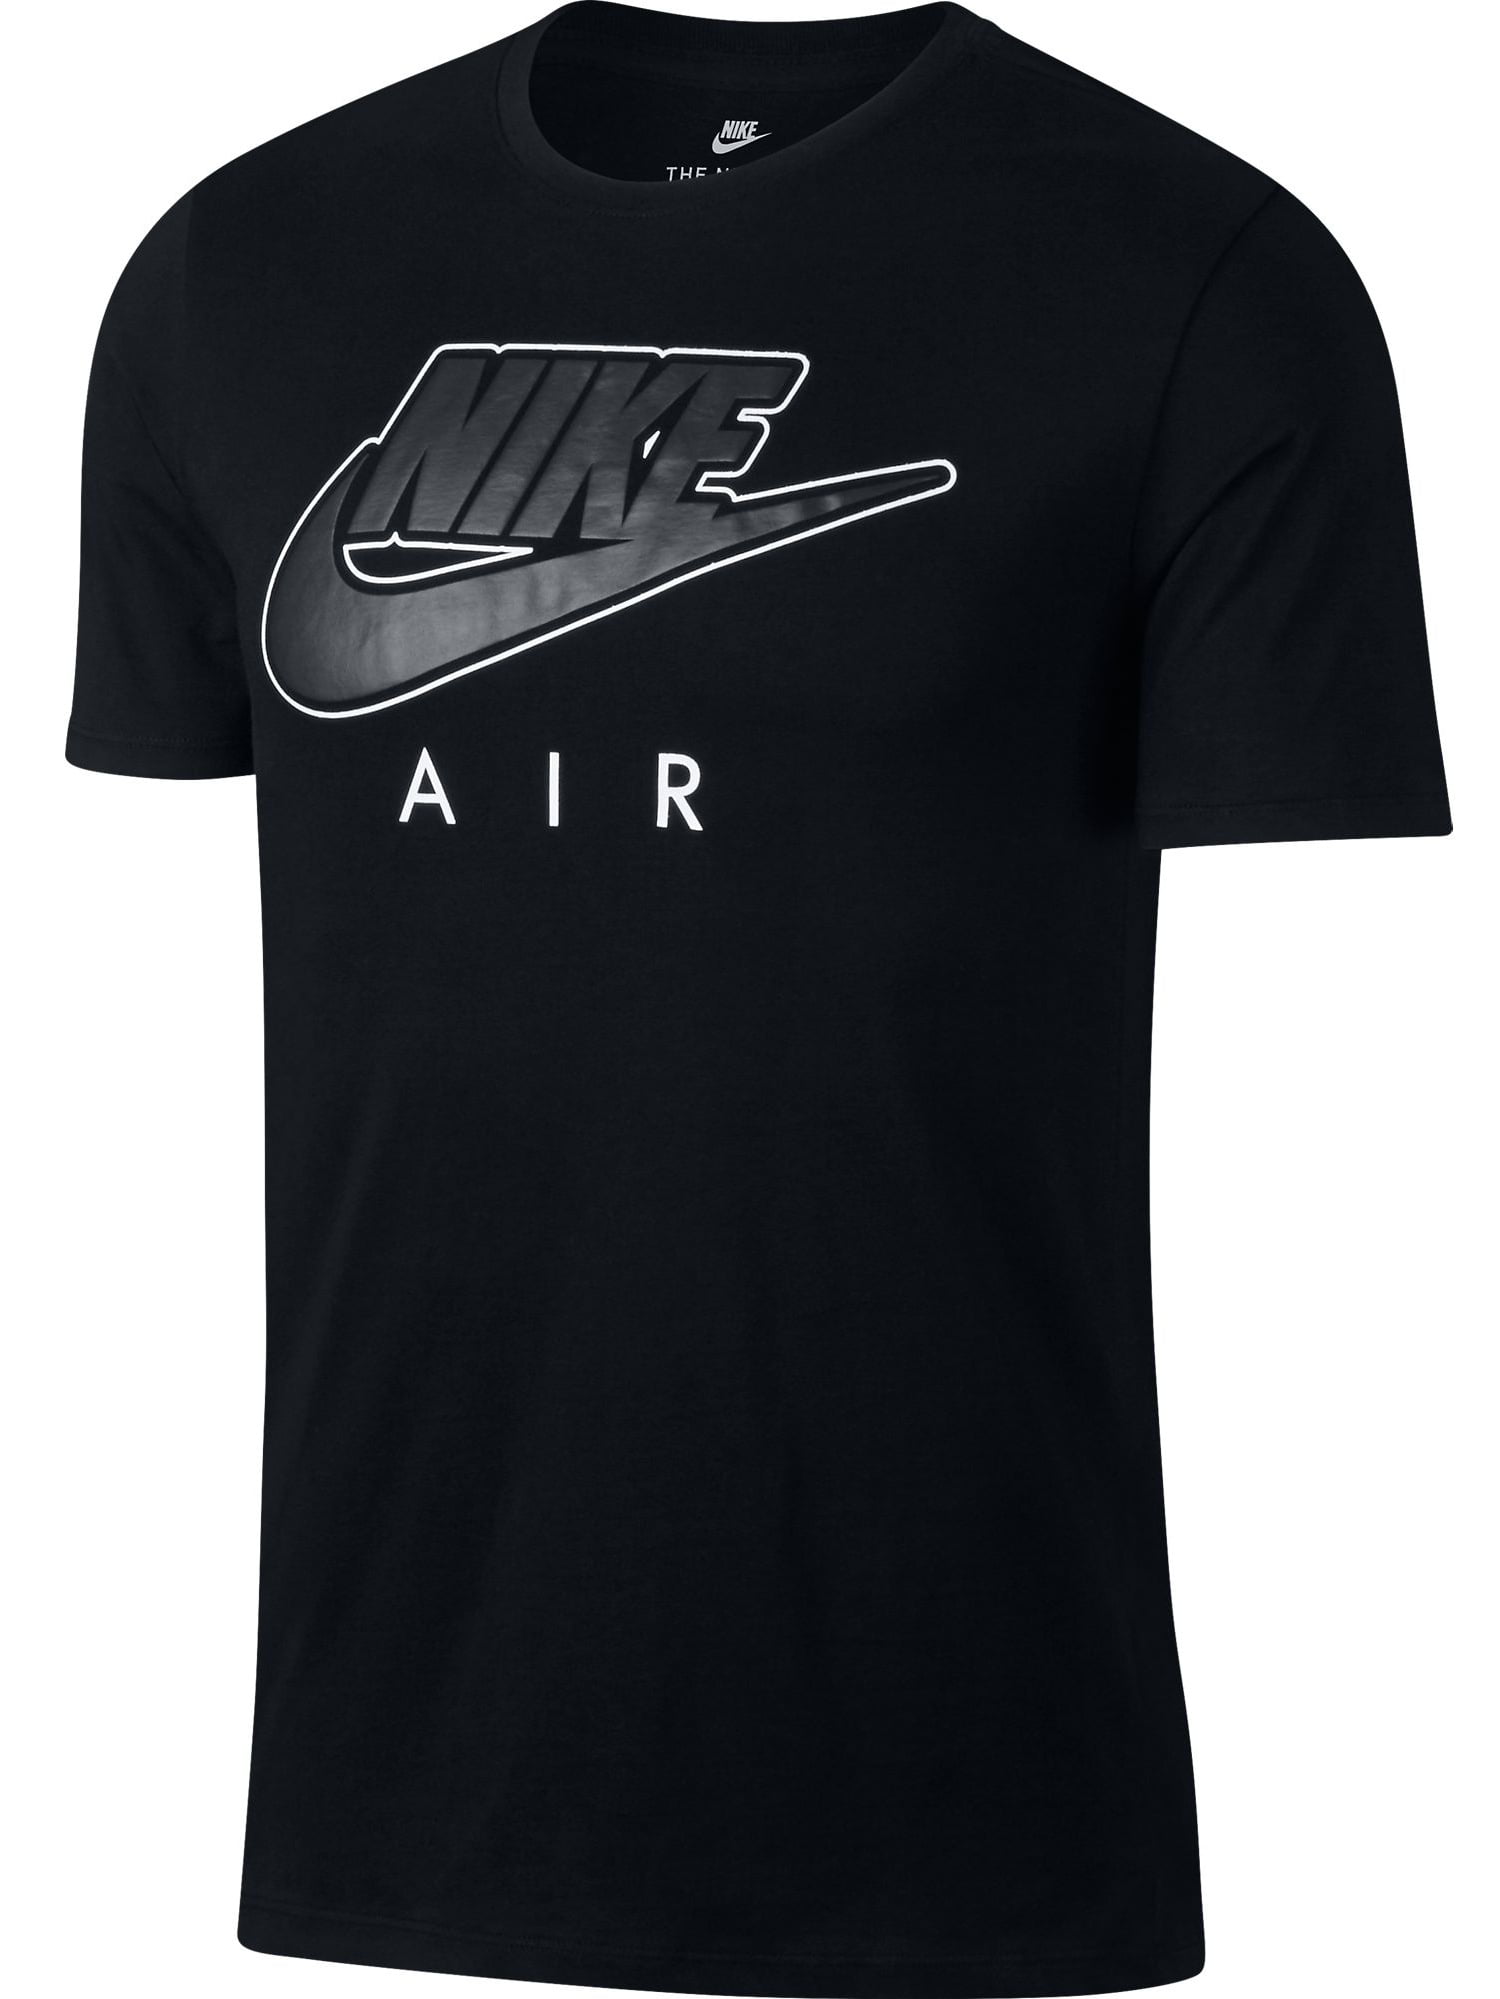 Perseguir Gallo idioma Nike Air More Uptempo Men's Shortsleeve T-Shirt Black/White 906964-010 -  Walmart.com